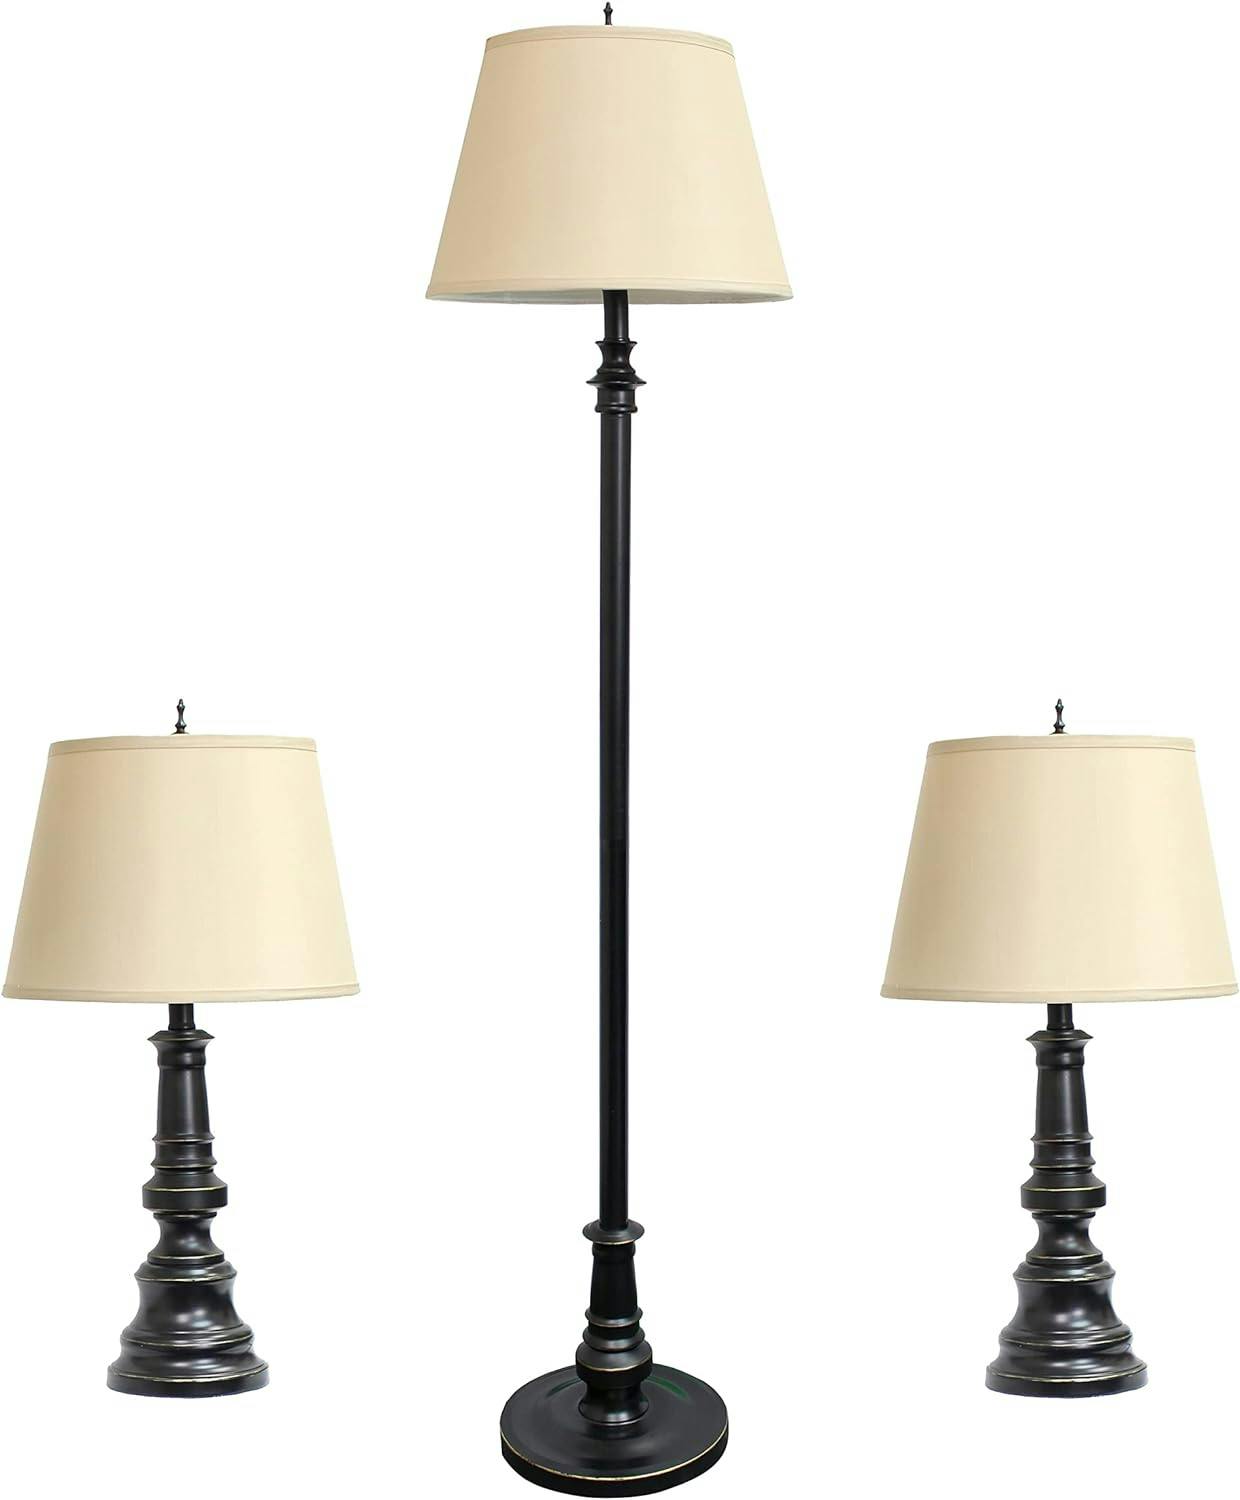 Elegant 3-Piece Bronze Lamp Set with Tan Fabric Shades